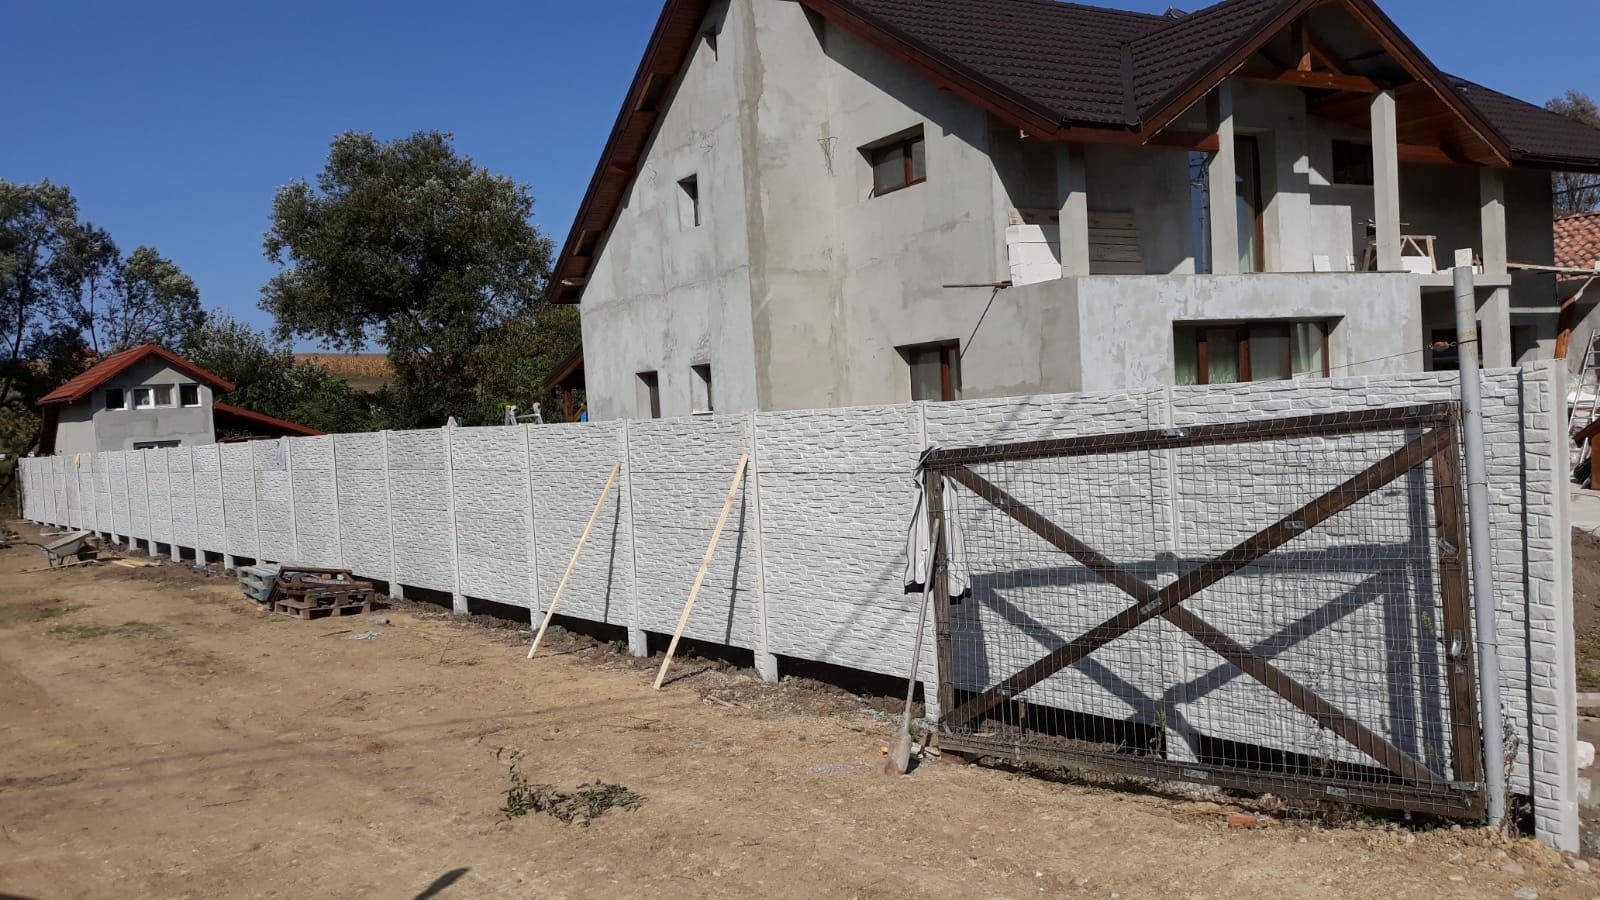 Gard din placi din beton